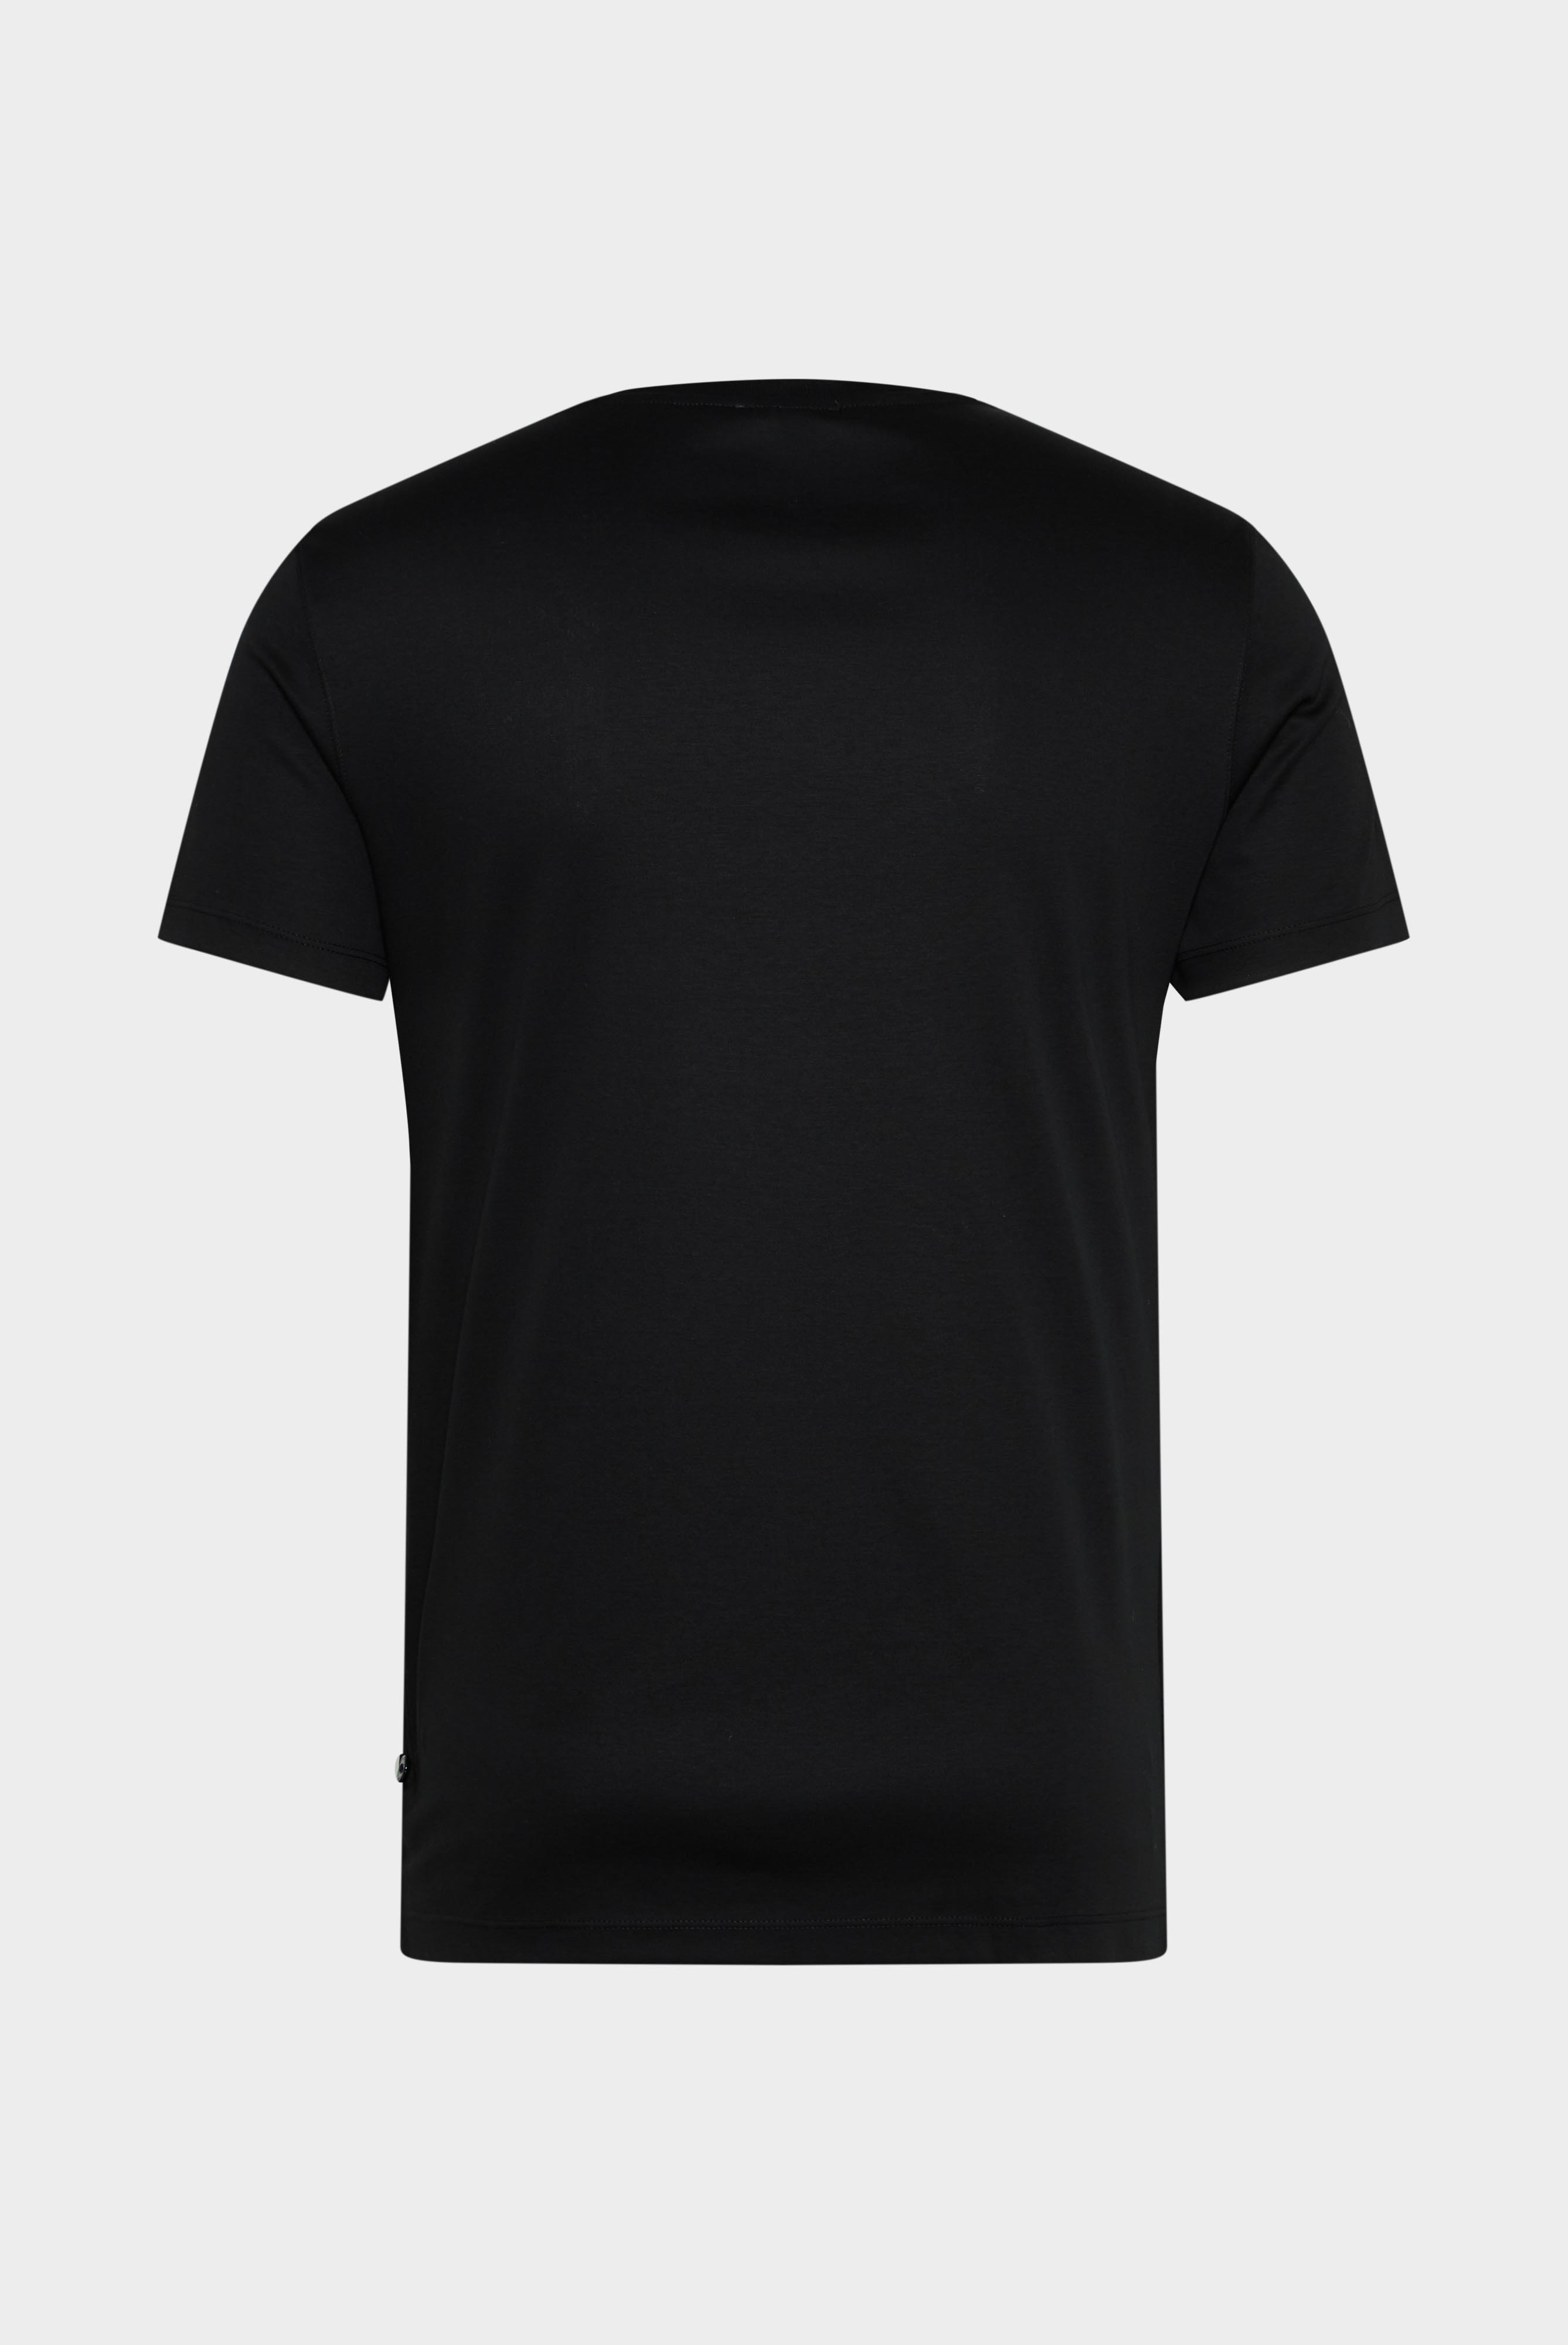 T-Shirts+Swiss Cotton Jersey Crew Neck T-Shirt+20.1717.UX.180031.099.S